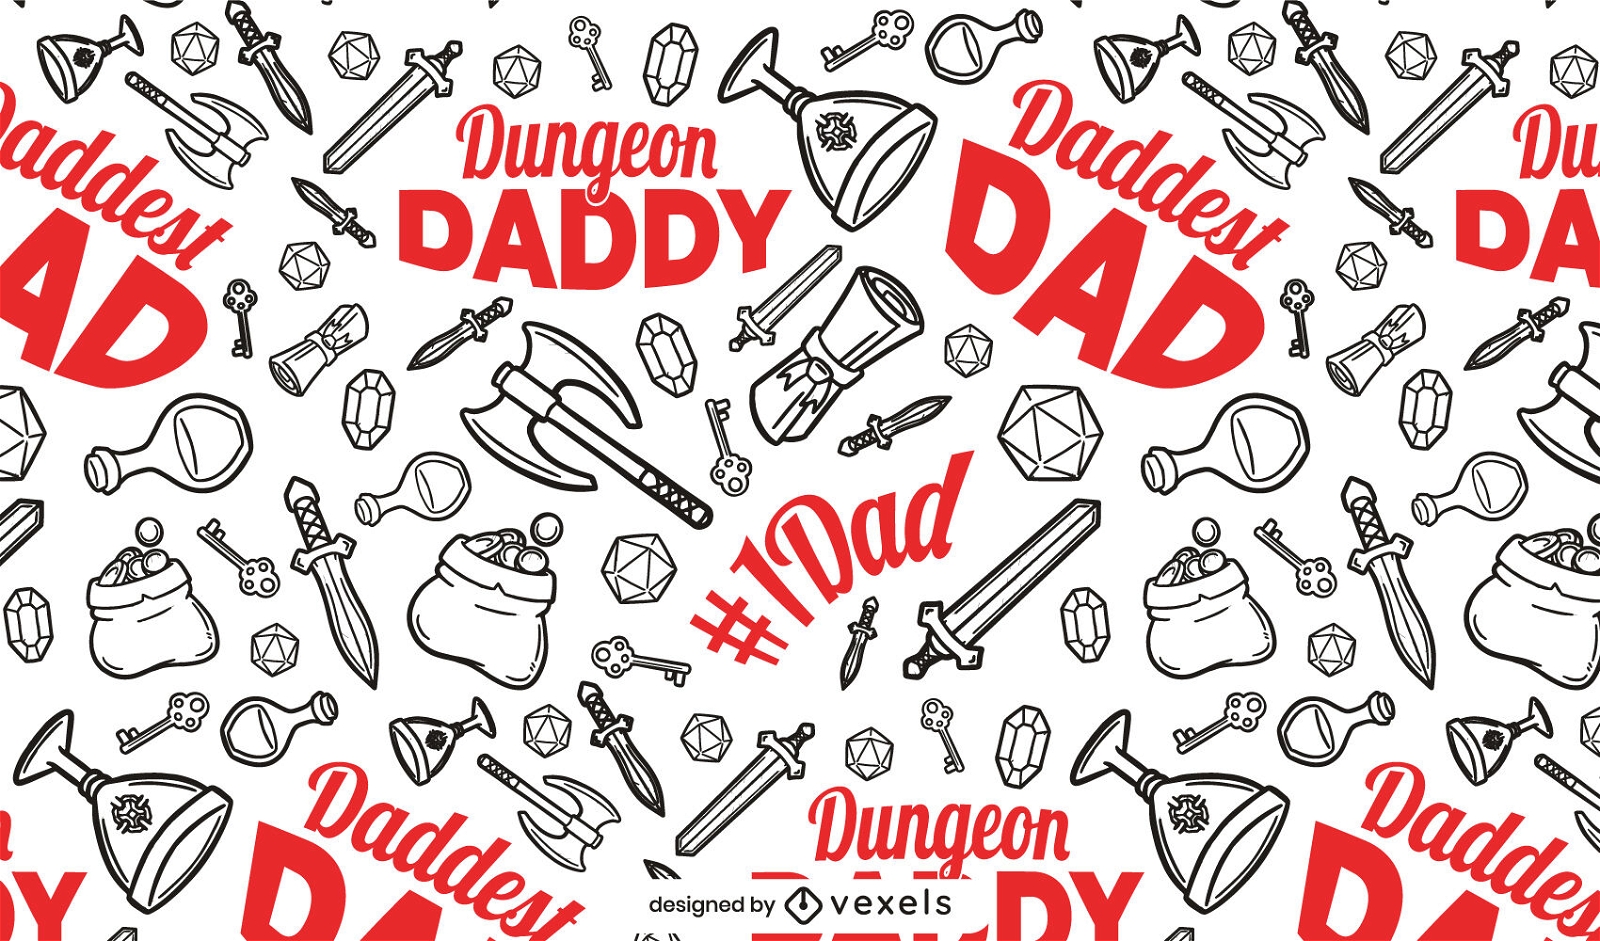 Dungeon daddy quotes pattern design